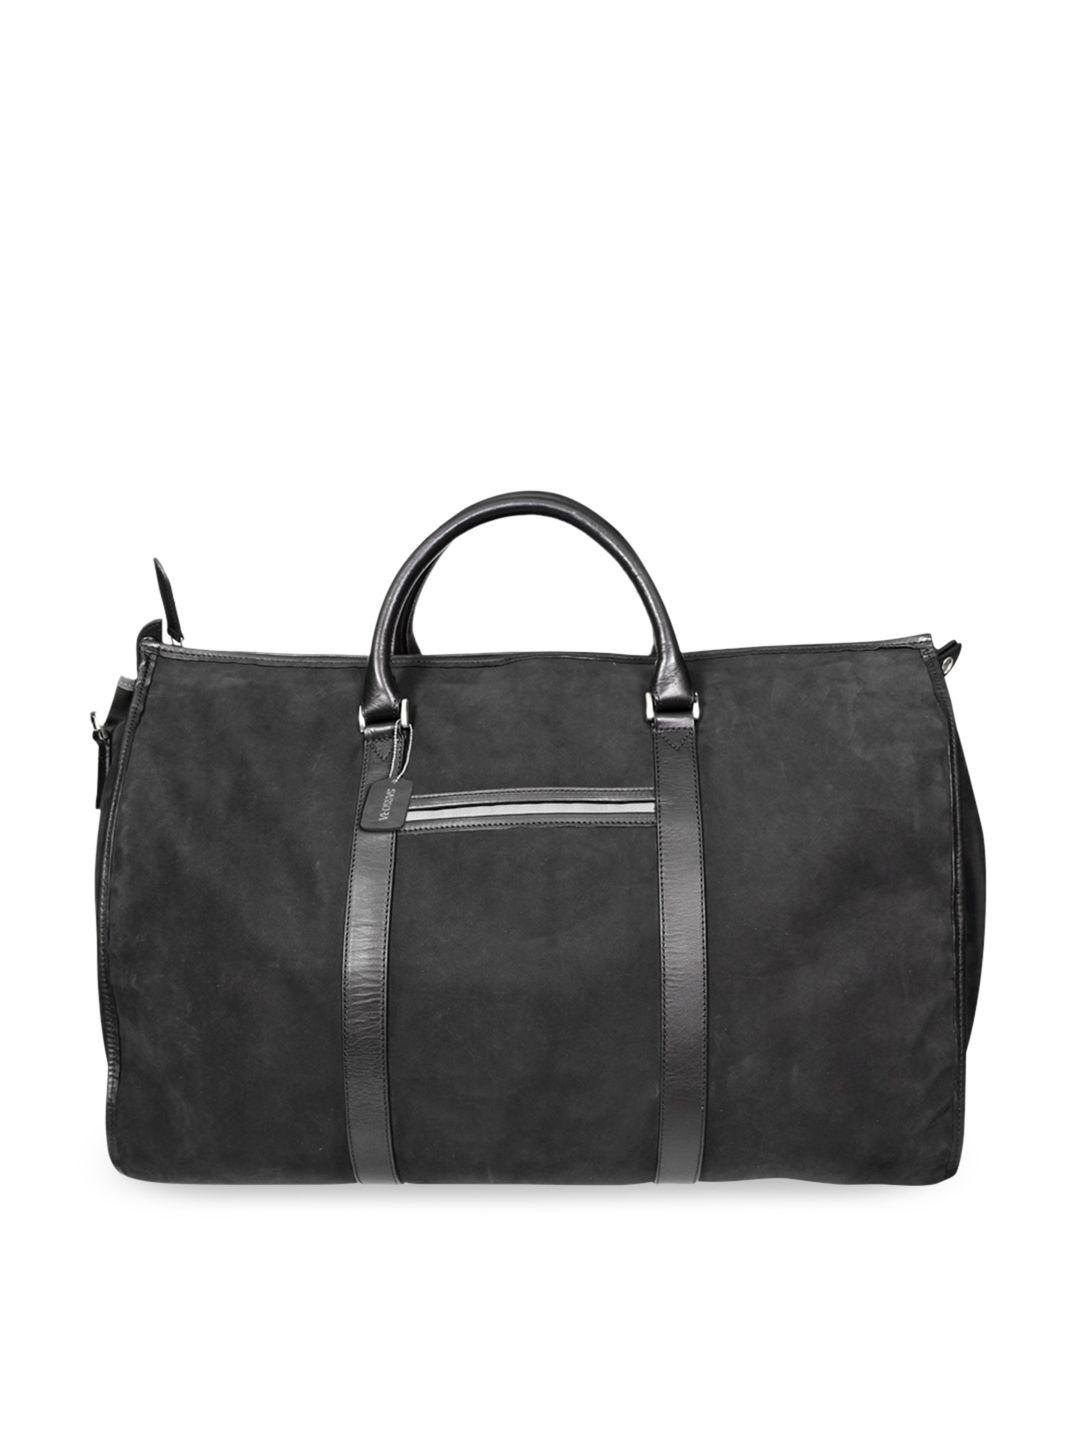 sassora genuine leather large duffel bag